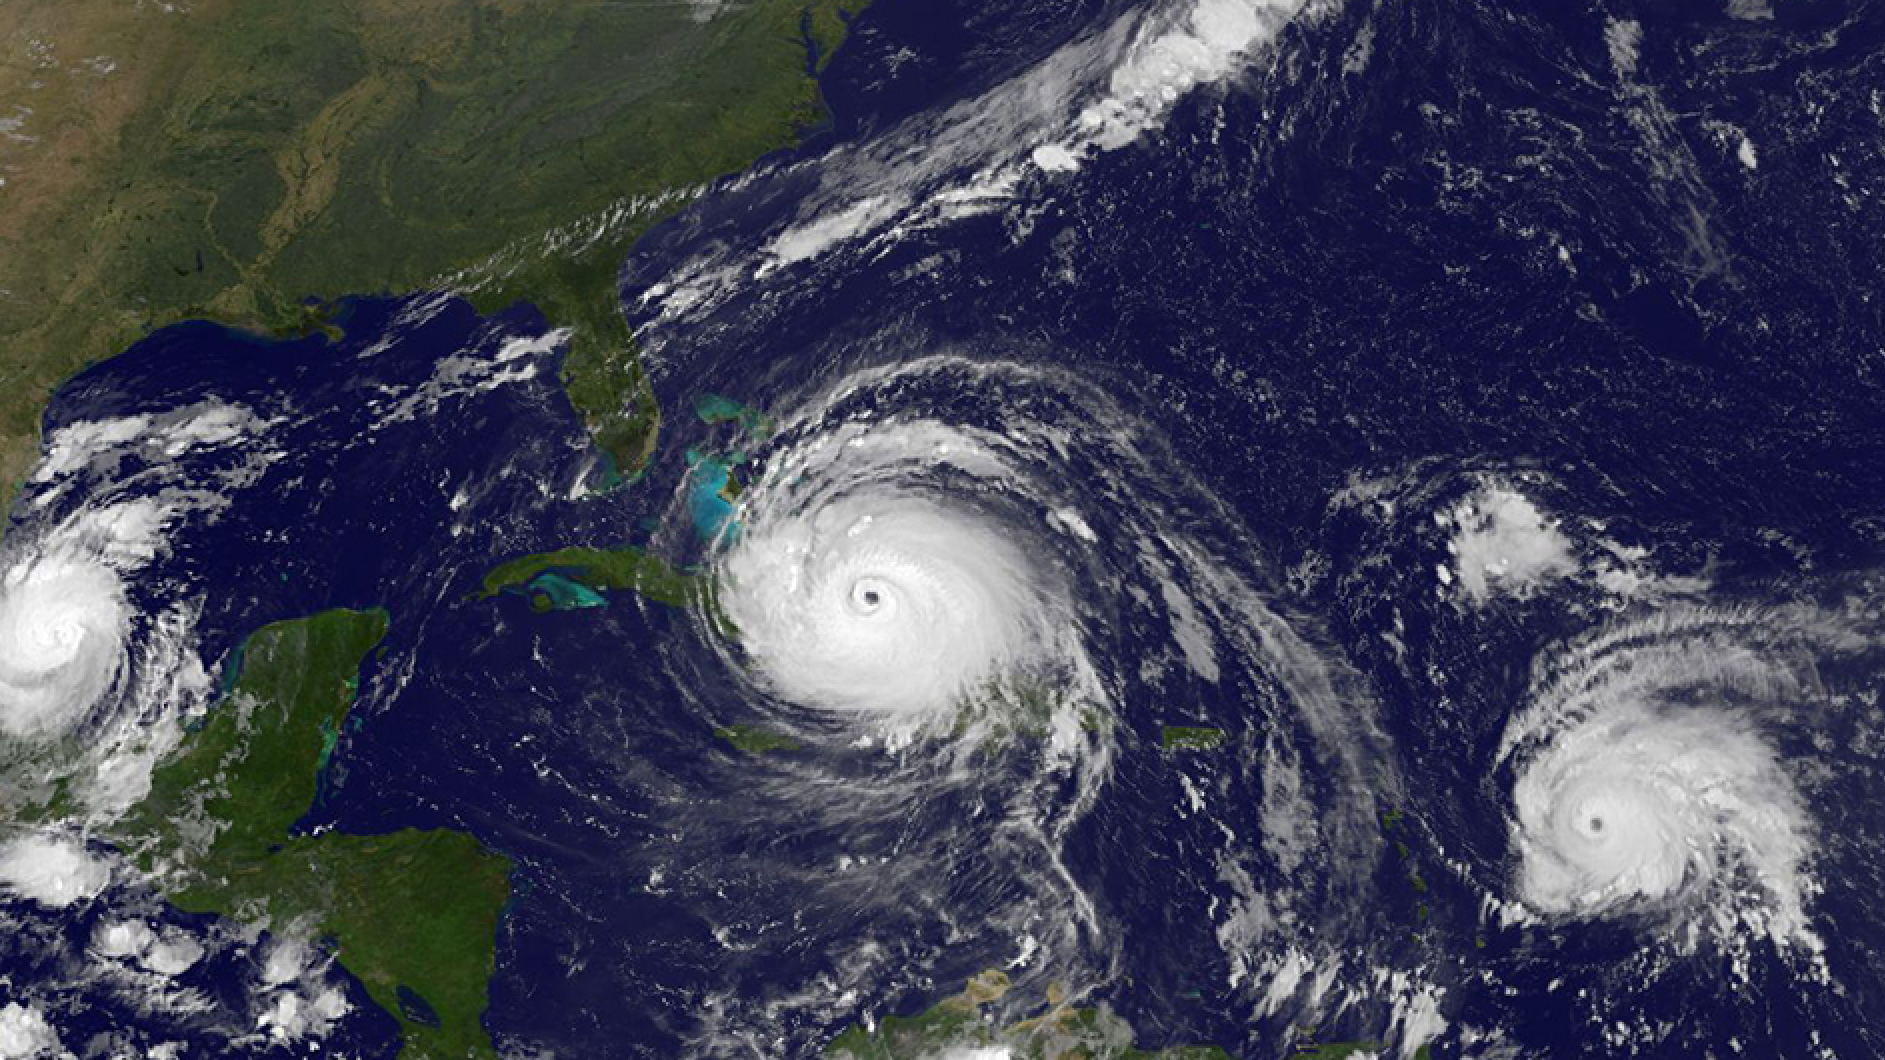 PHOTO-GOES-16-full-disk-image-of-hurricanes-Katia-Irma-and-Jose-captured-September-8-2017-NOAA-1125×534-Landscape